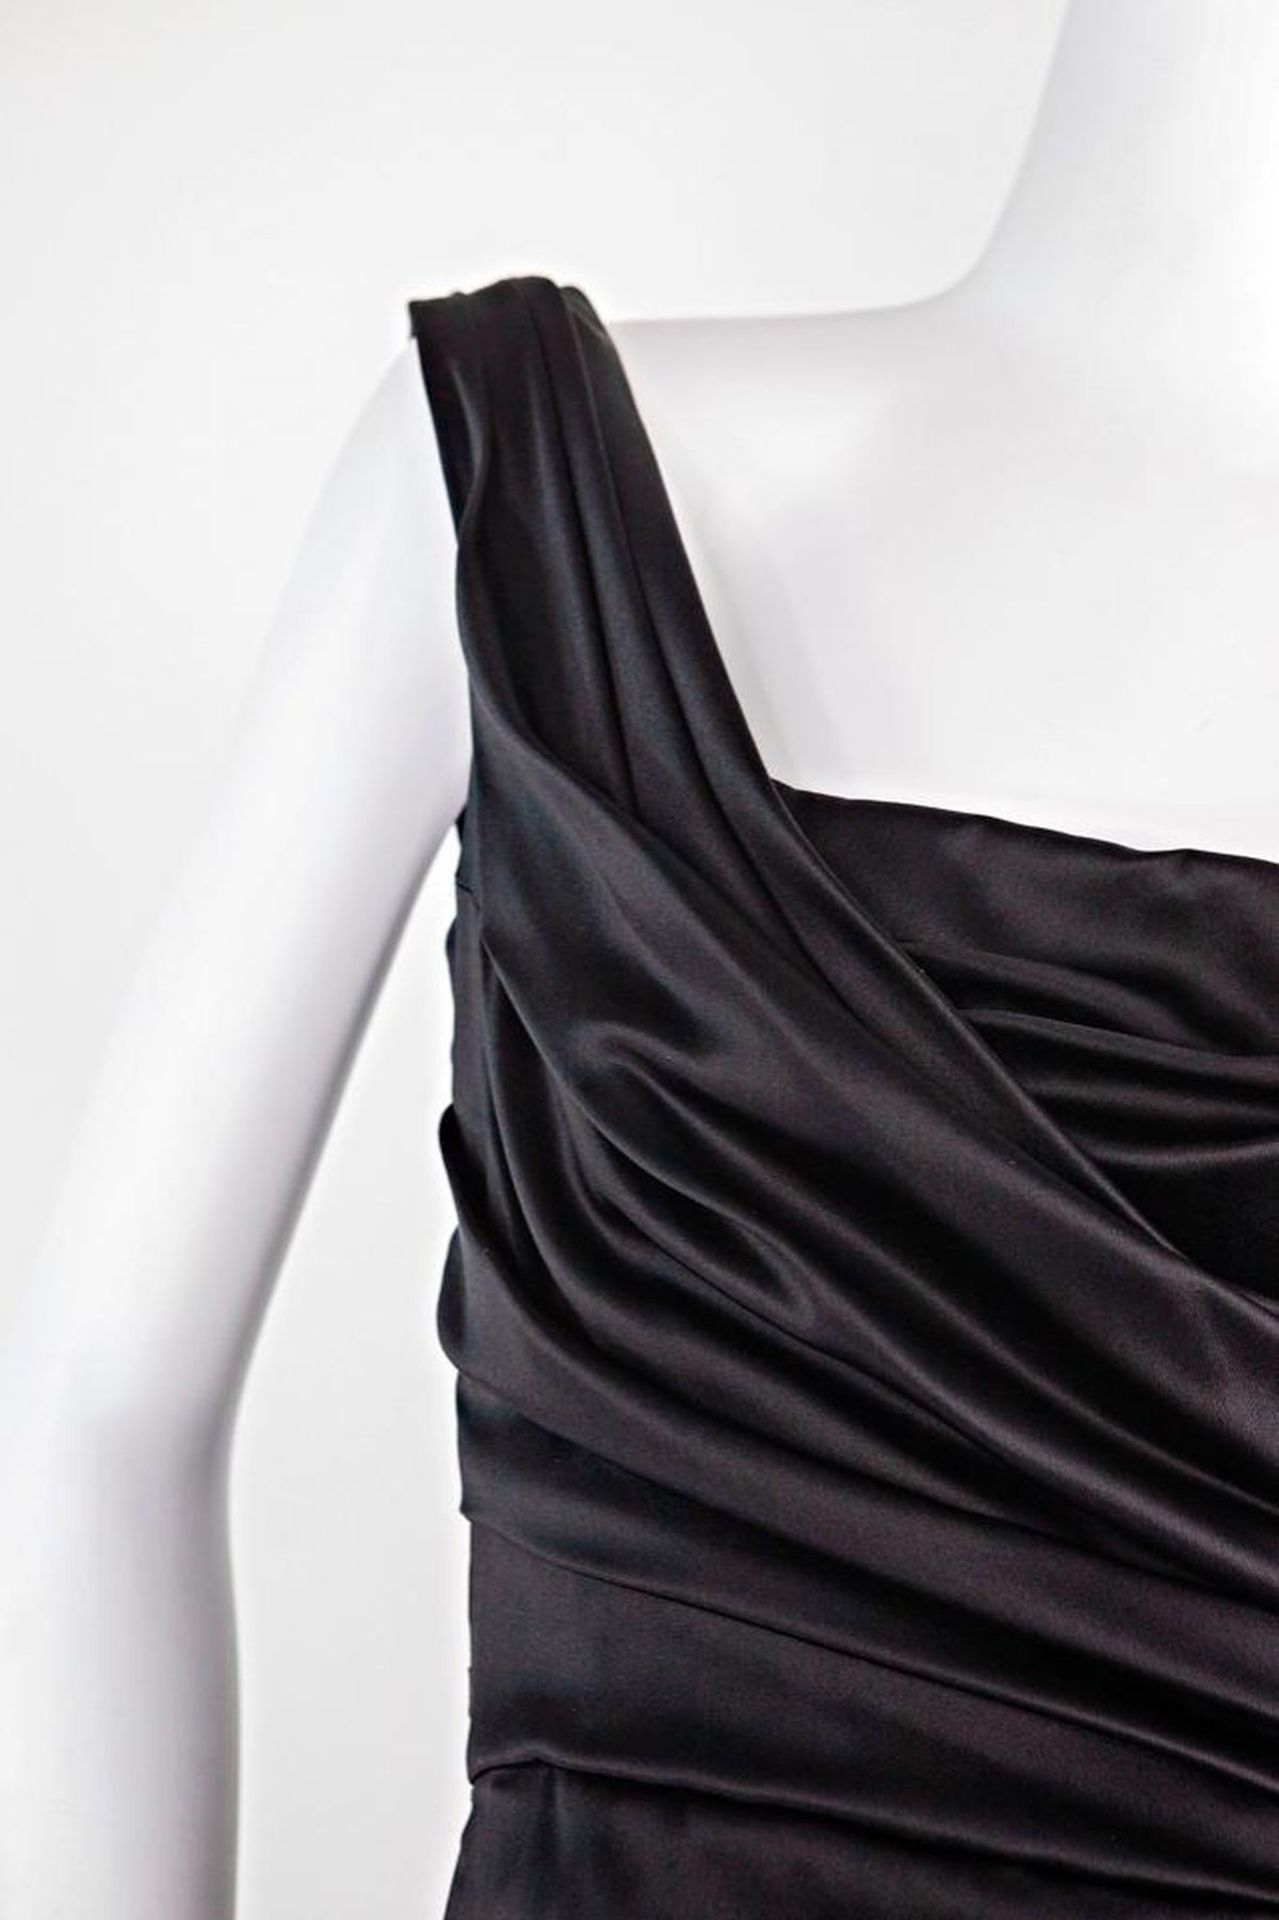 Dolce & Gabbana Little Black Dress - Image 2 of 7